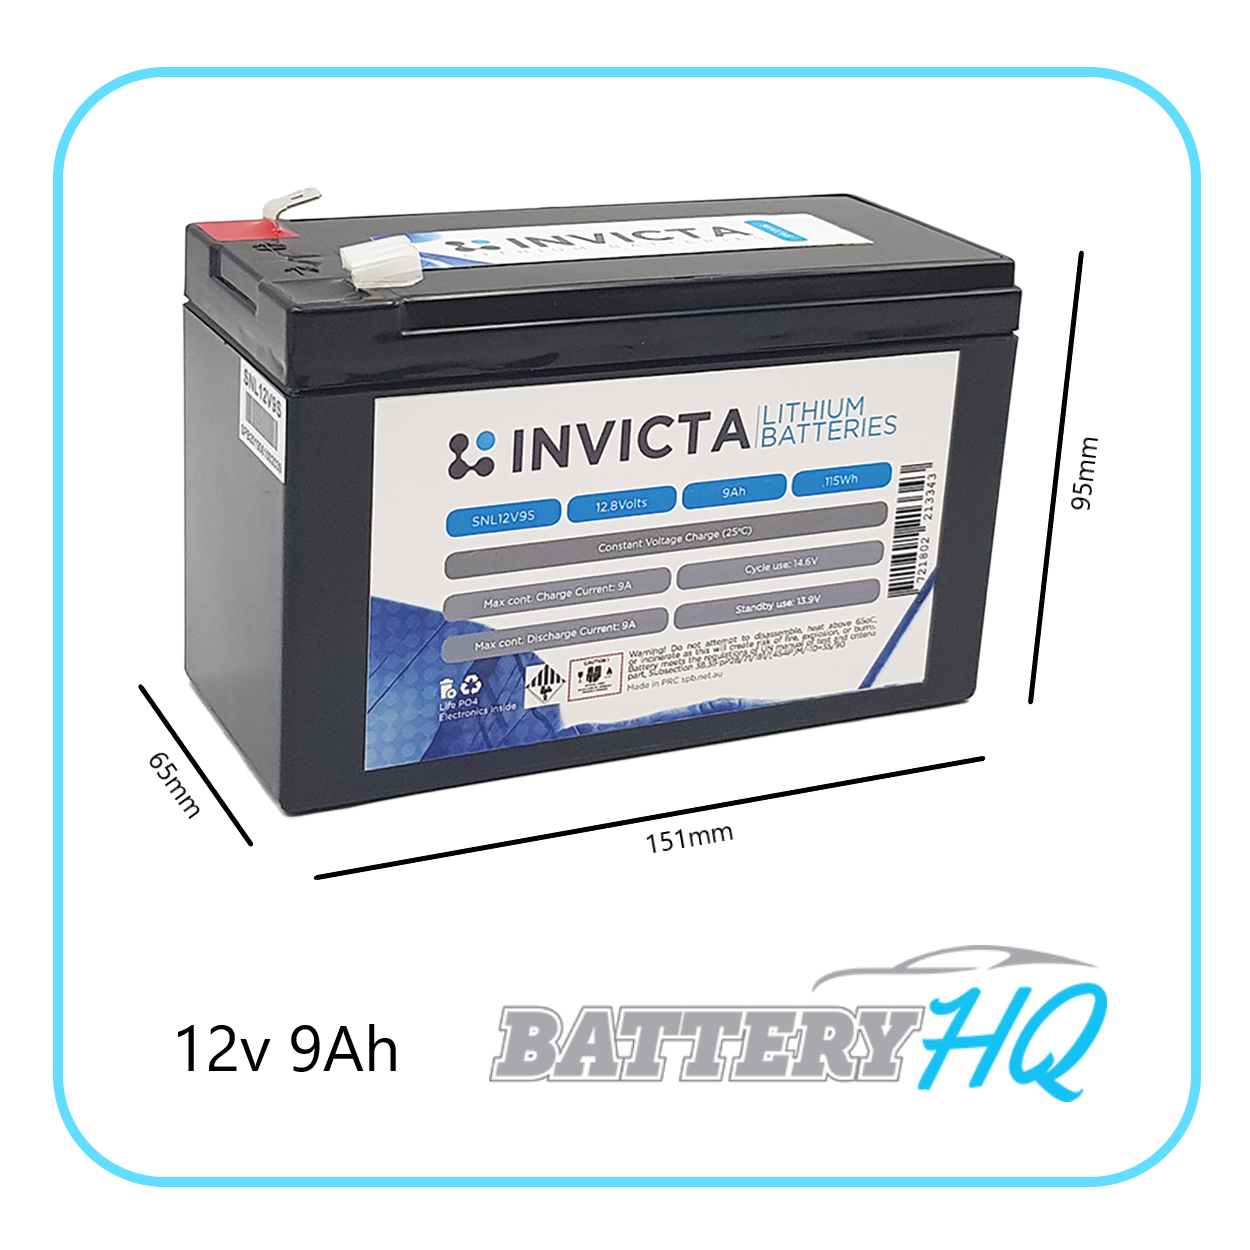 Invicta SNL12v9 Lithium Deep Cycle Battery HQ Brisbane